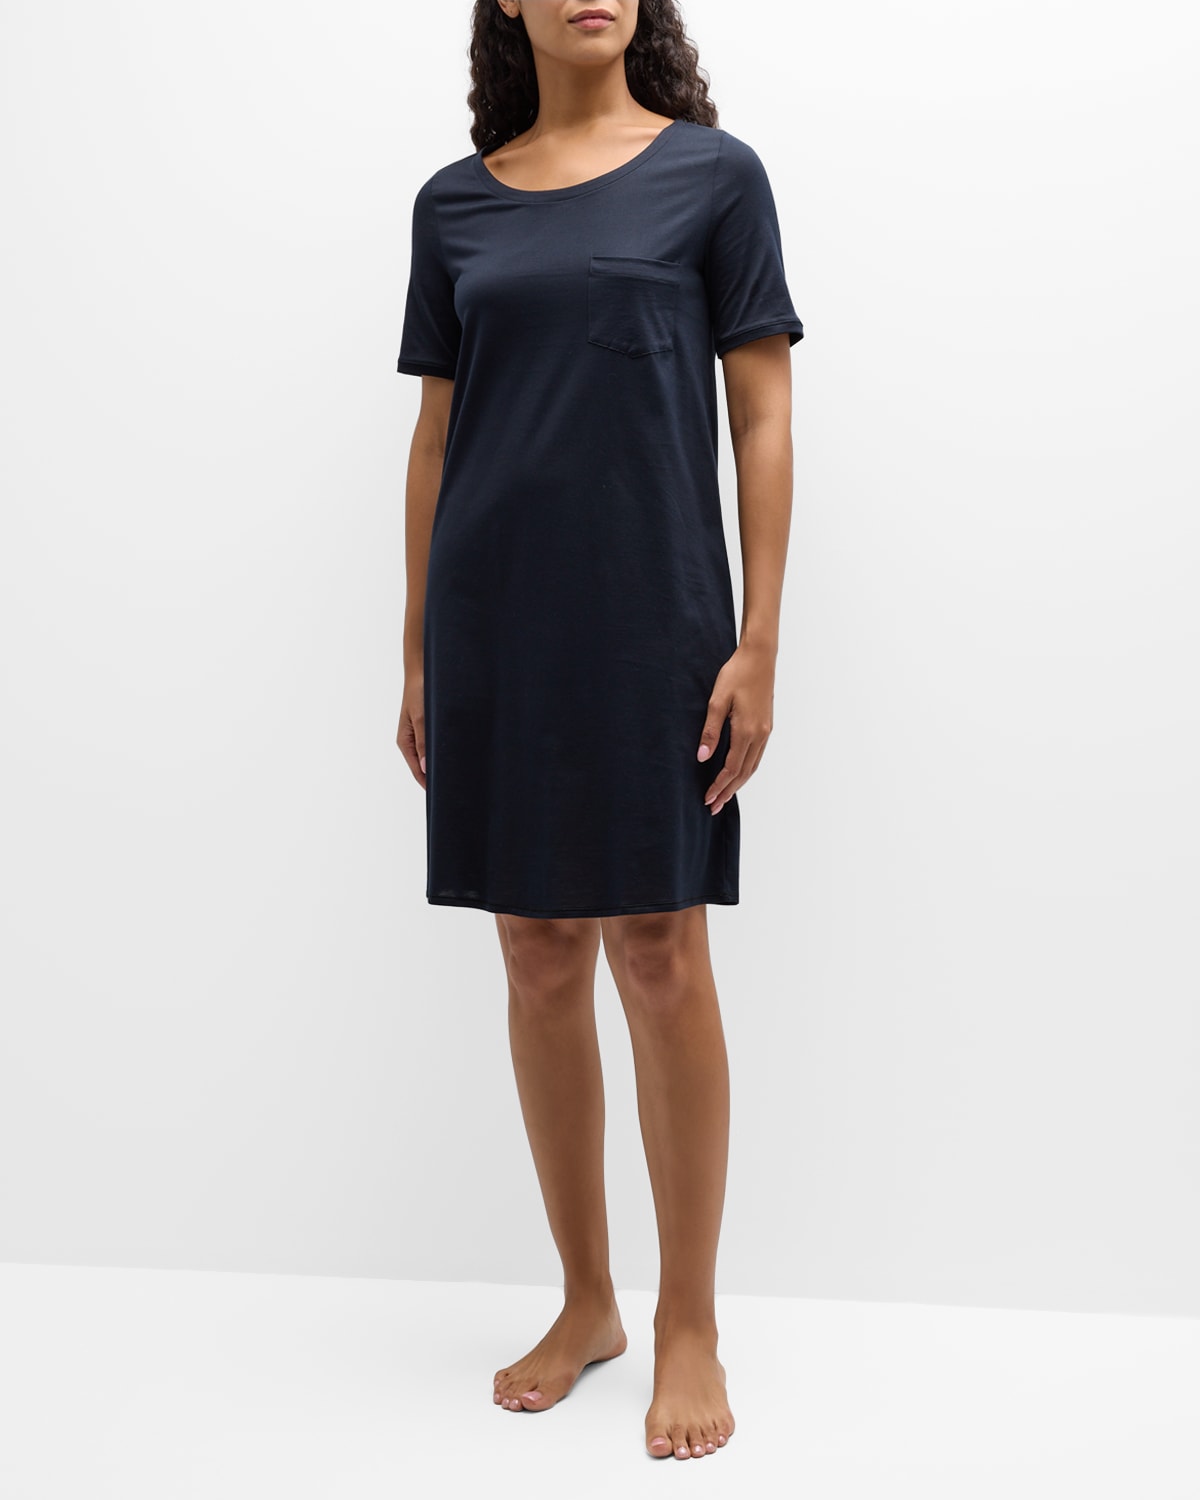 Womens Clothing Nightwear and sleepwear Nightgowns and sleepshirts Hanro Cotton Sina Nightdress in Navy Blue 